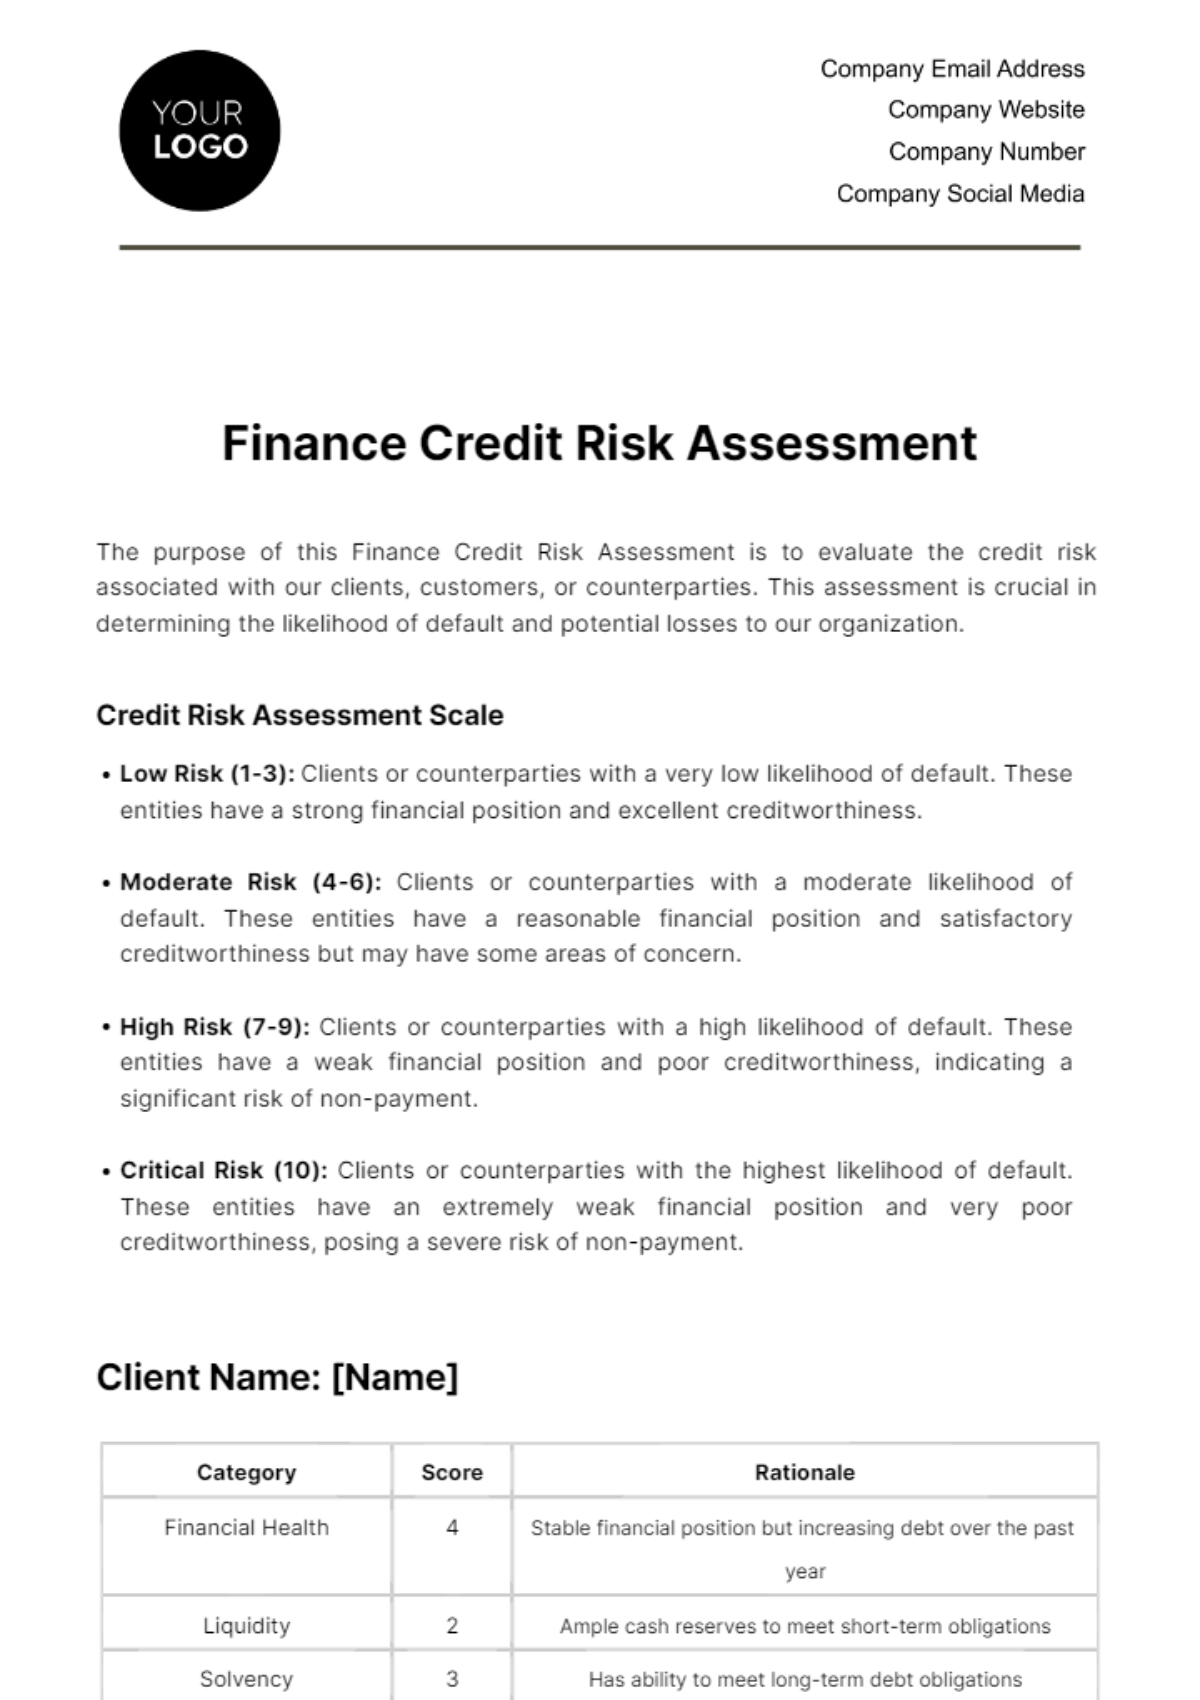 Finance Credit Risk Assessment Template